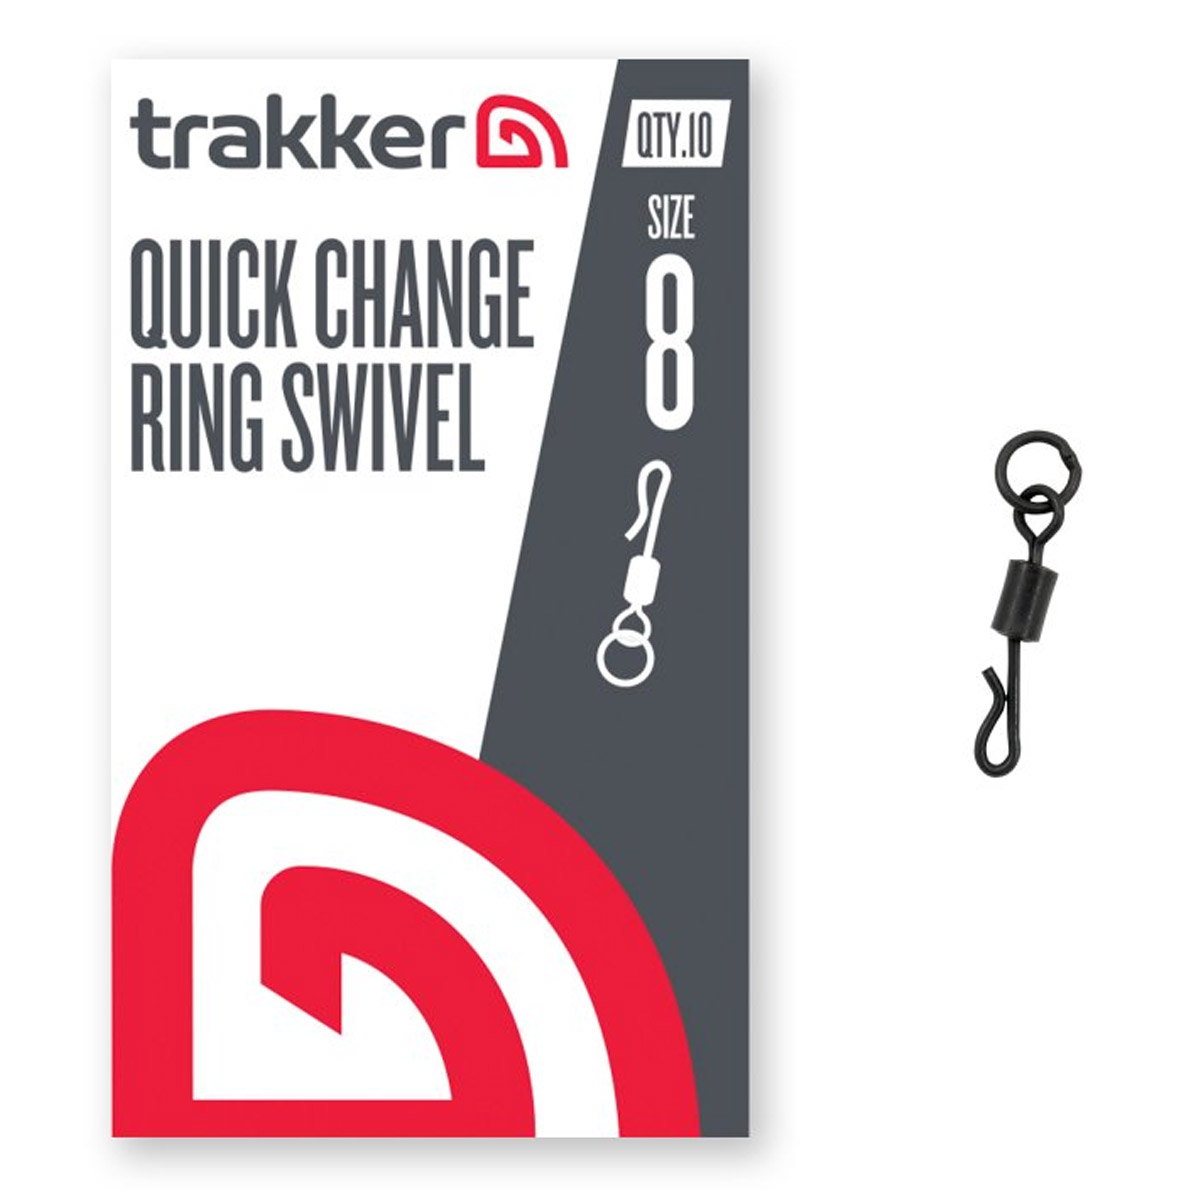 Trakker Quick Change Ring Swivel - Size 8